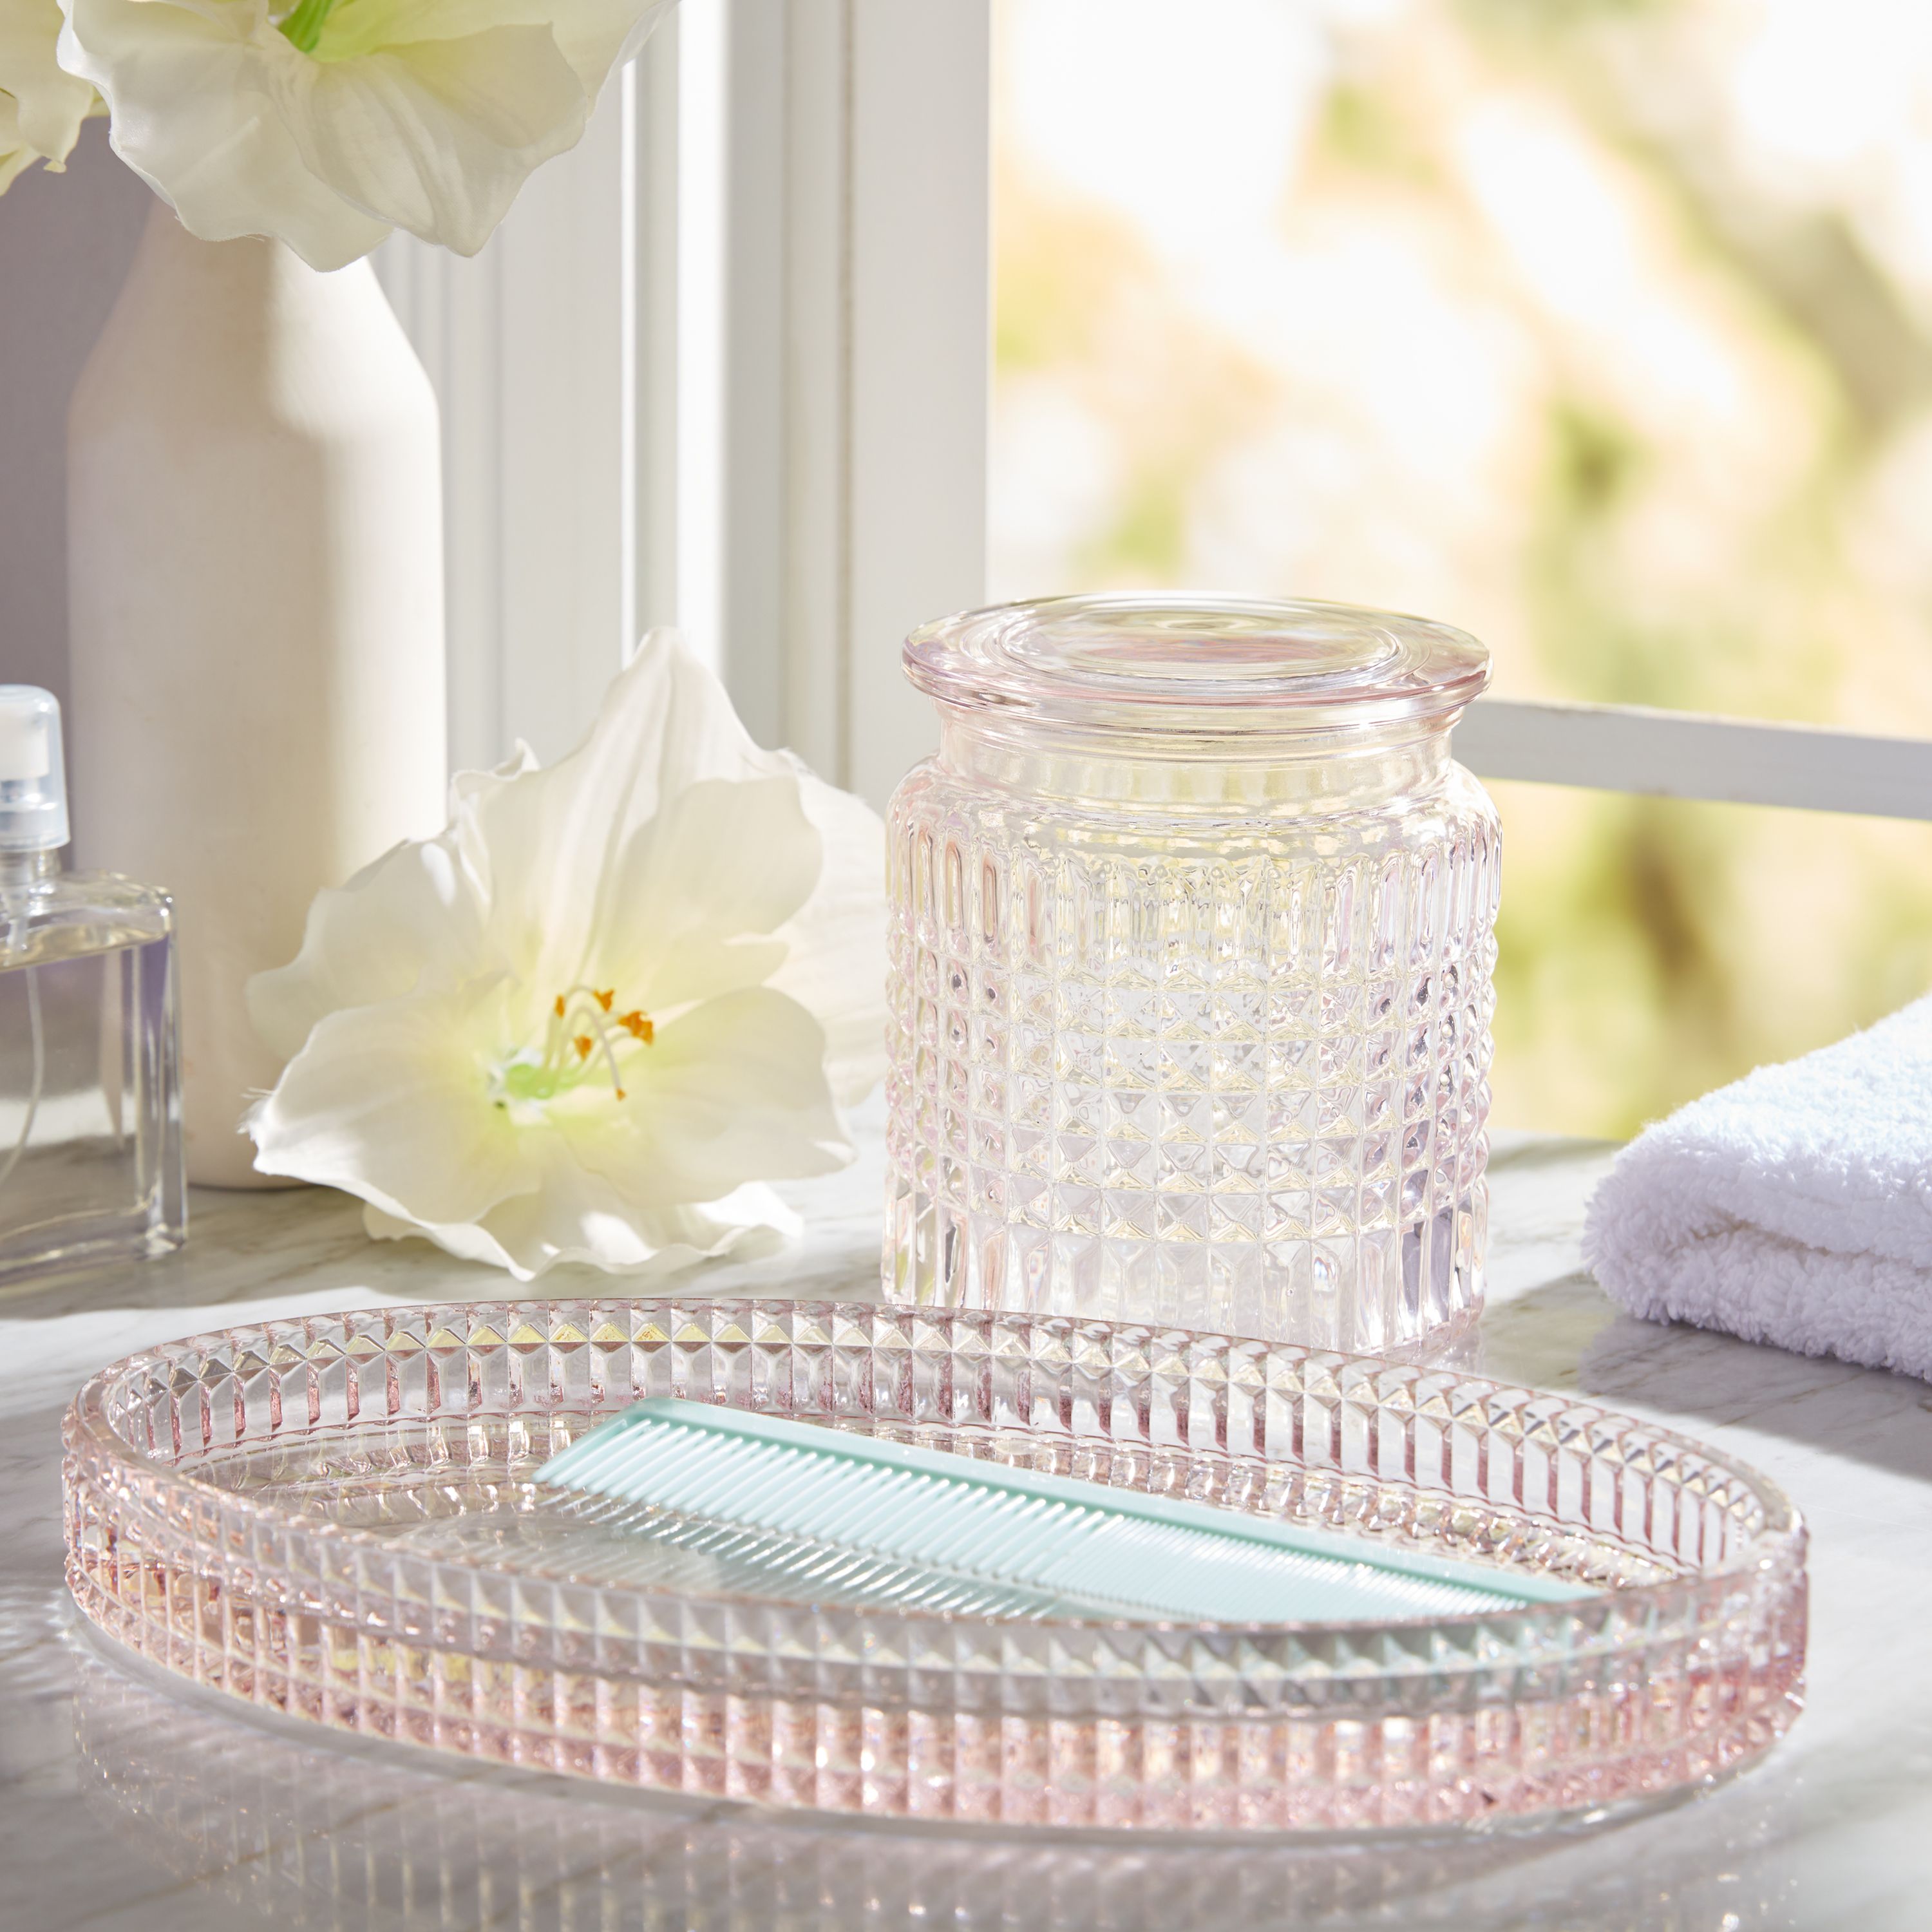 2 Piece Glass Bath Accessory Set by Drew Barrymore Flower Home - Light Pink | Walmart (US)